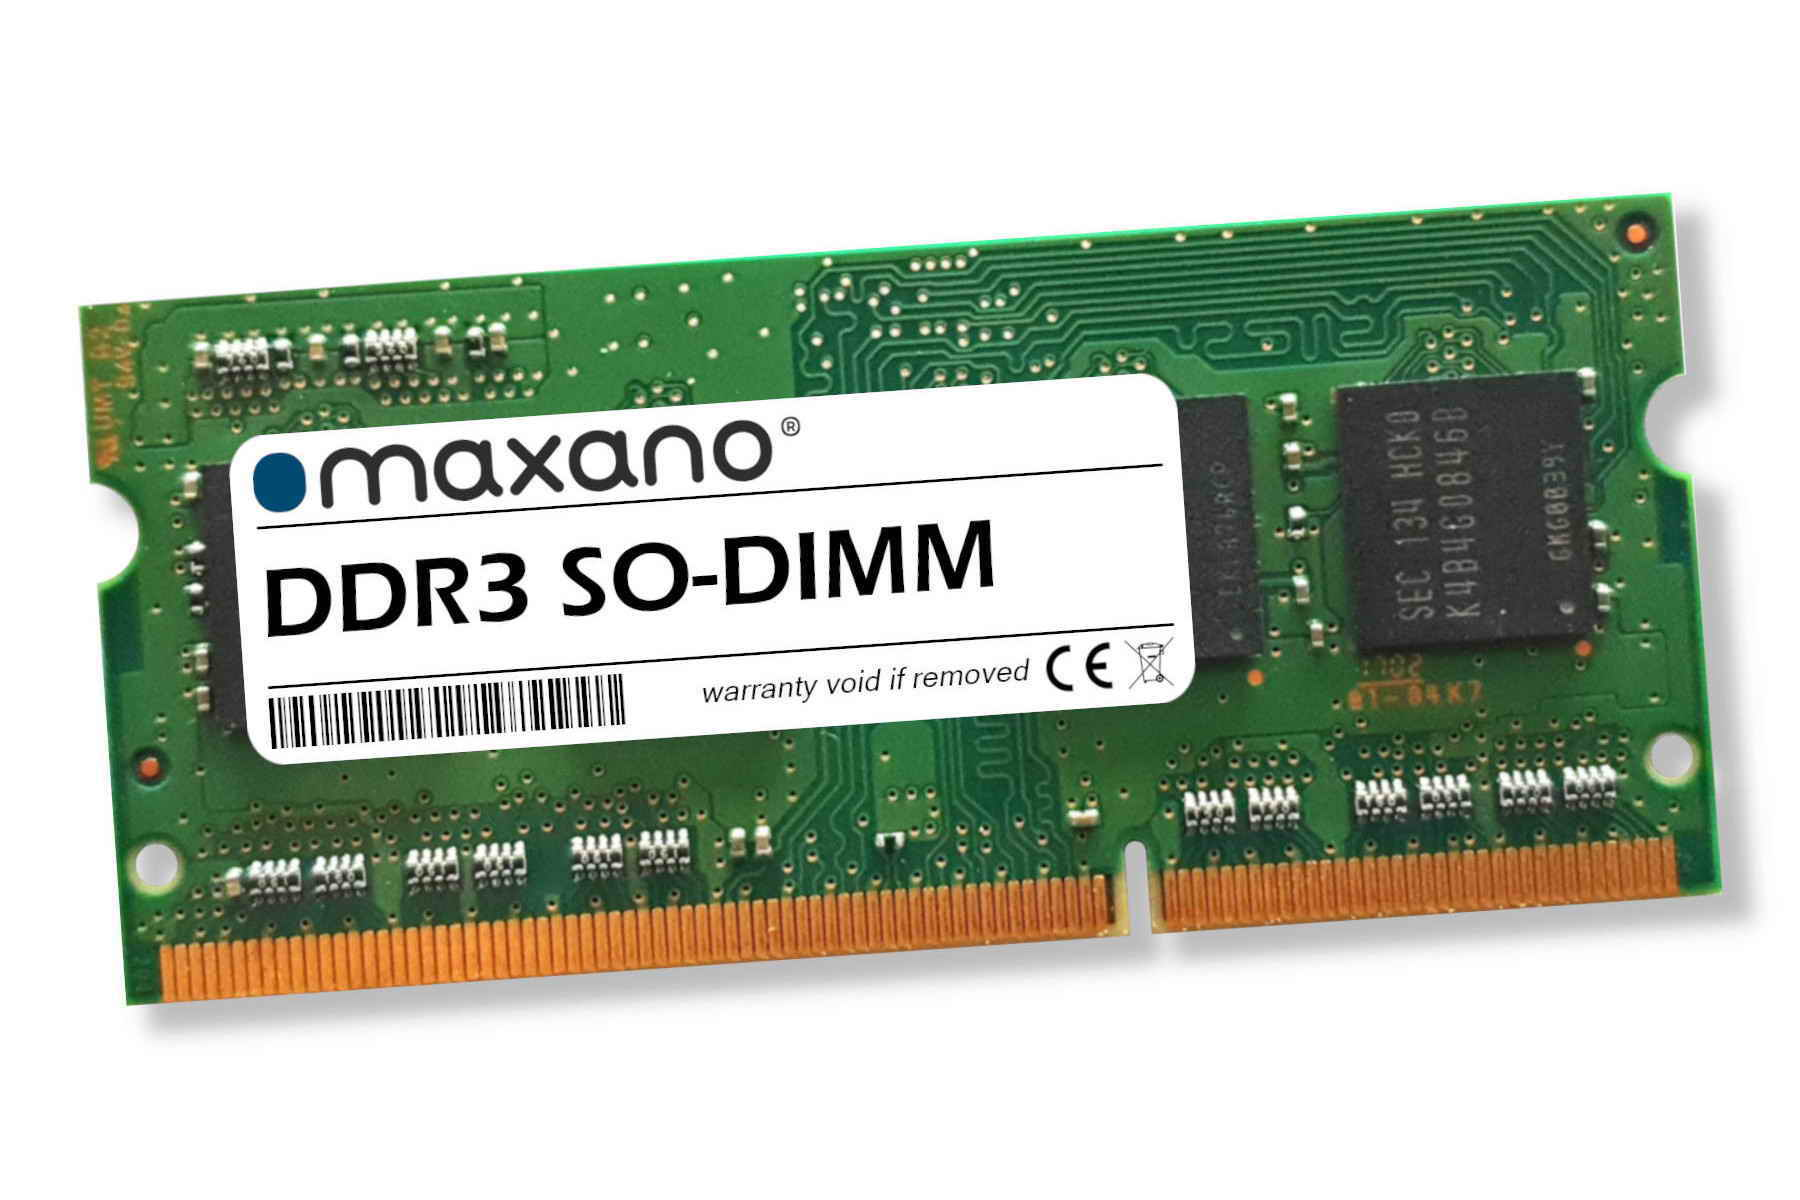 MAXANO 4GB RAM (PC3-12800 GB Asustor Arbeitsspeicher 4 AS6212RD für SO-DIMM) SDRAM